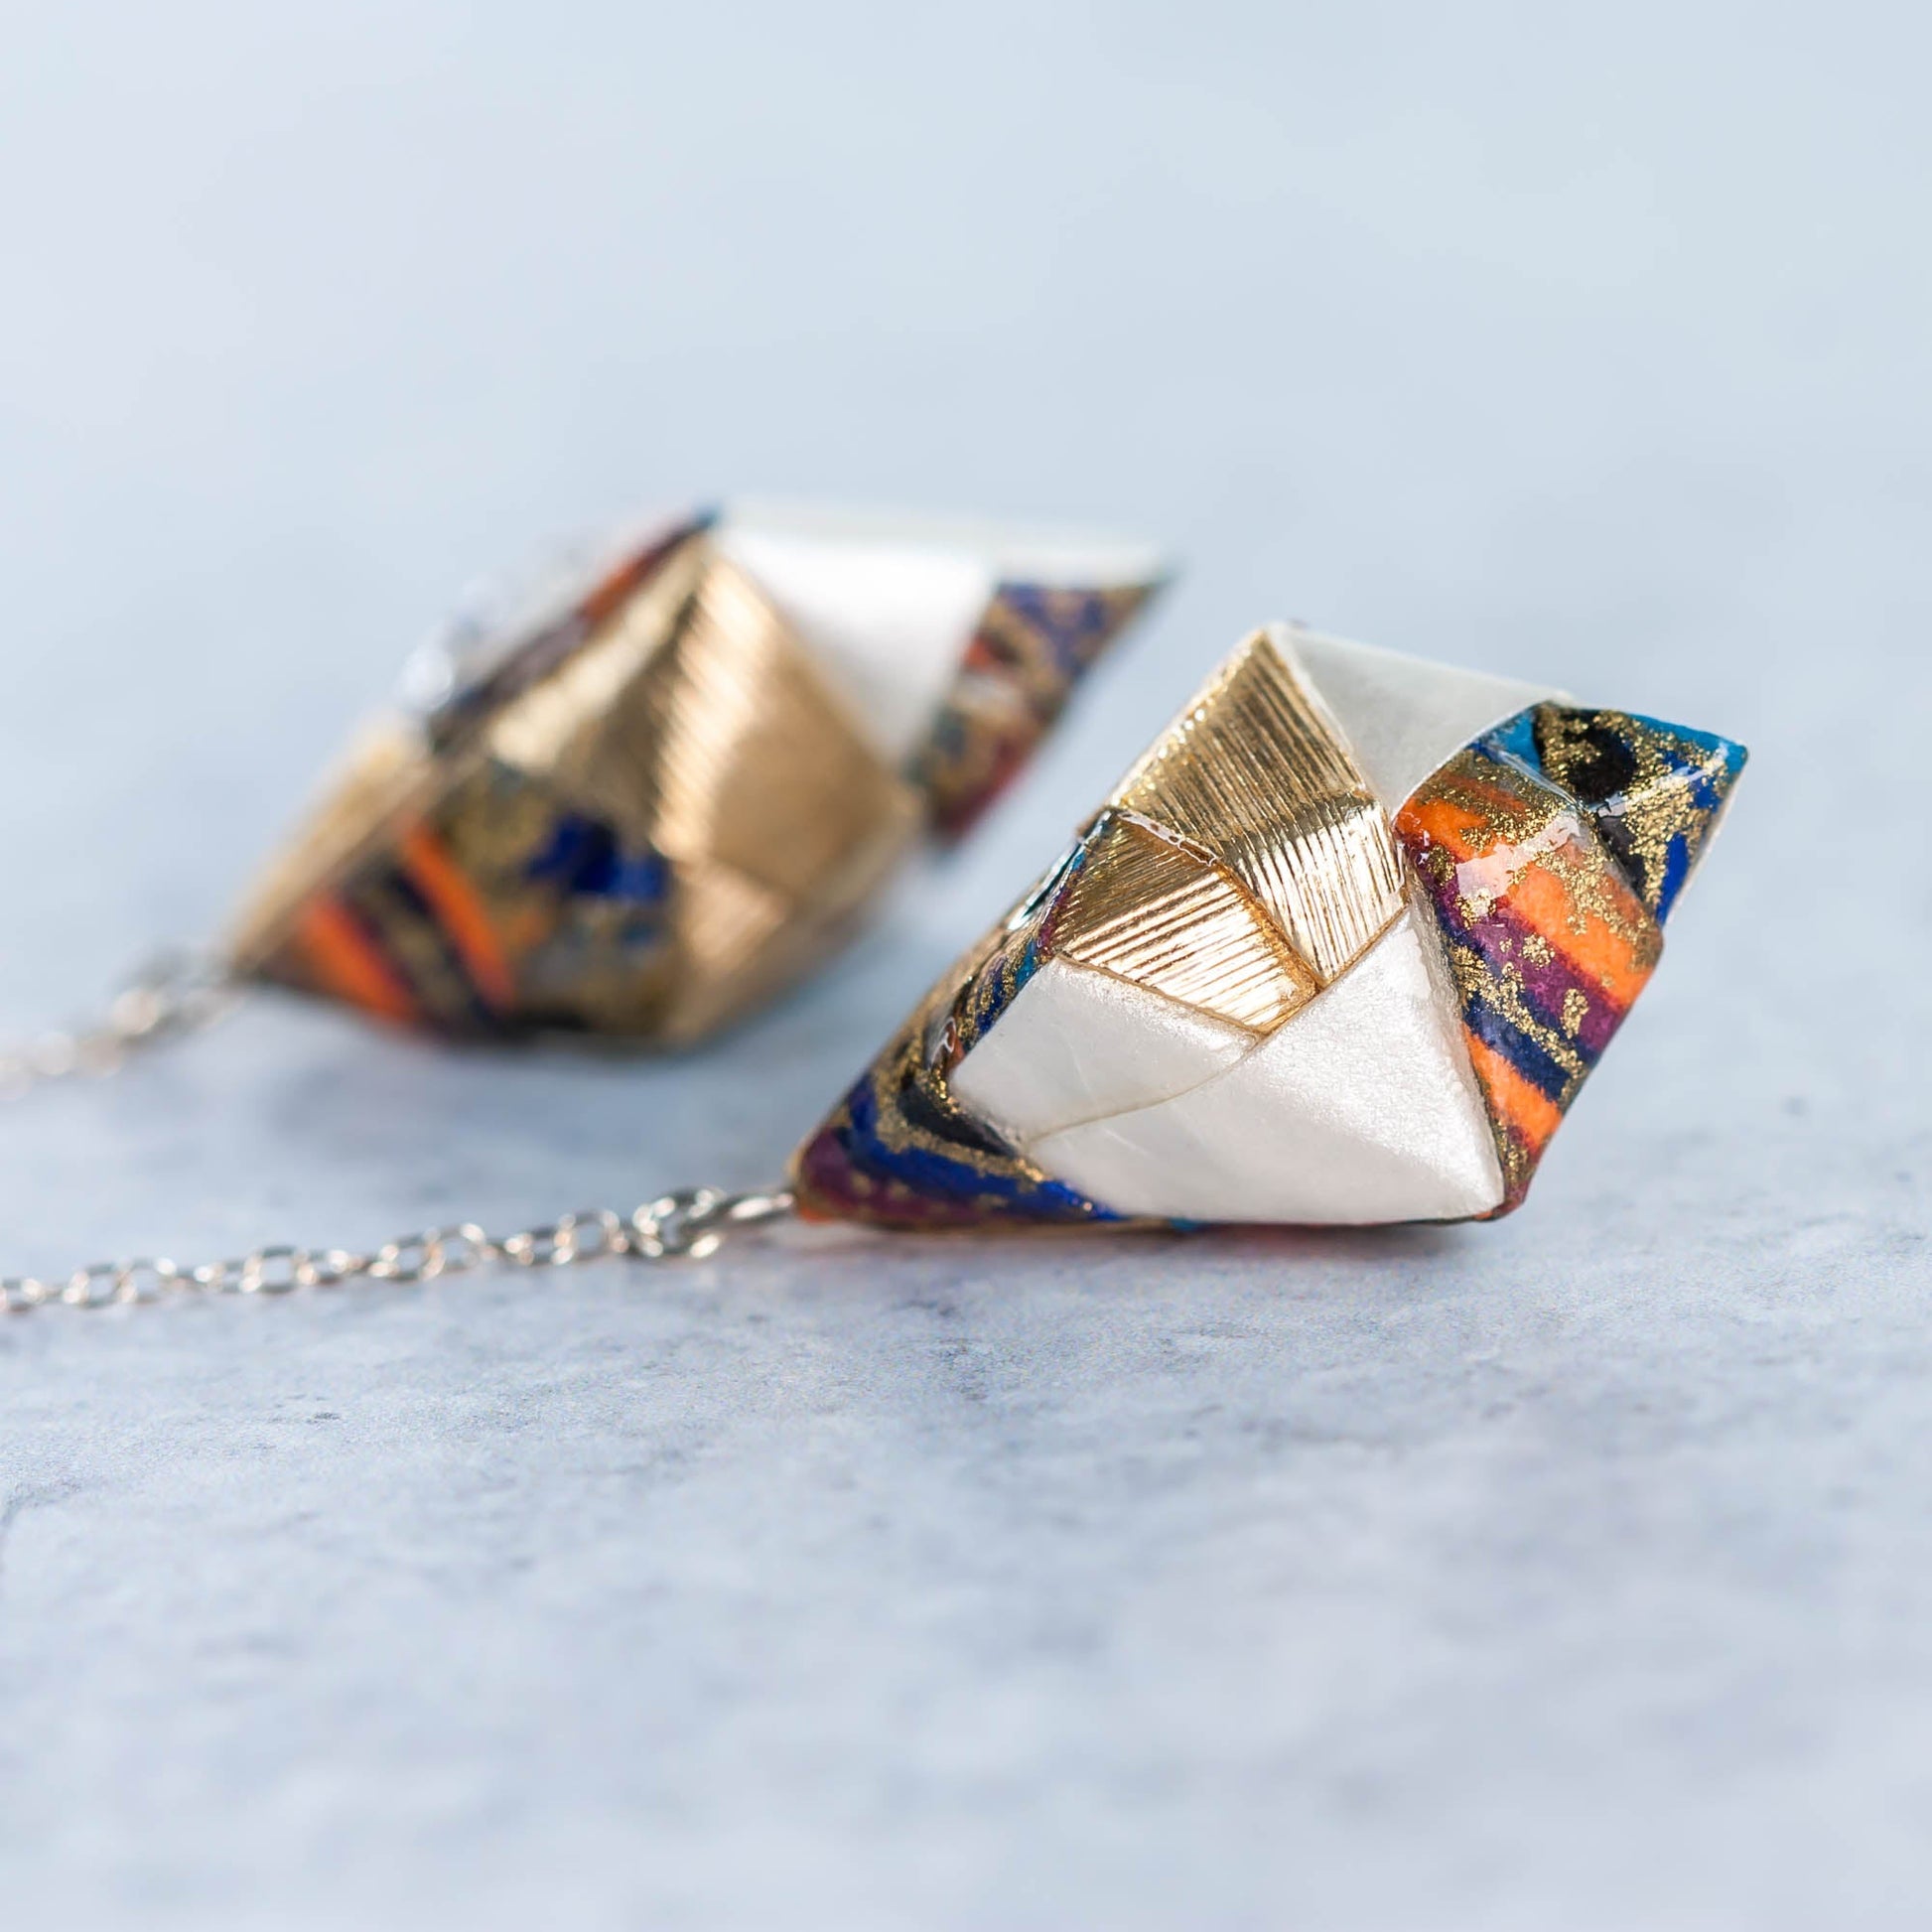 Origami Diamond Paper Earrings - Gold Jewel Tones - By LeeMo Designs in Bend, Oregon